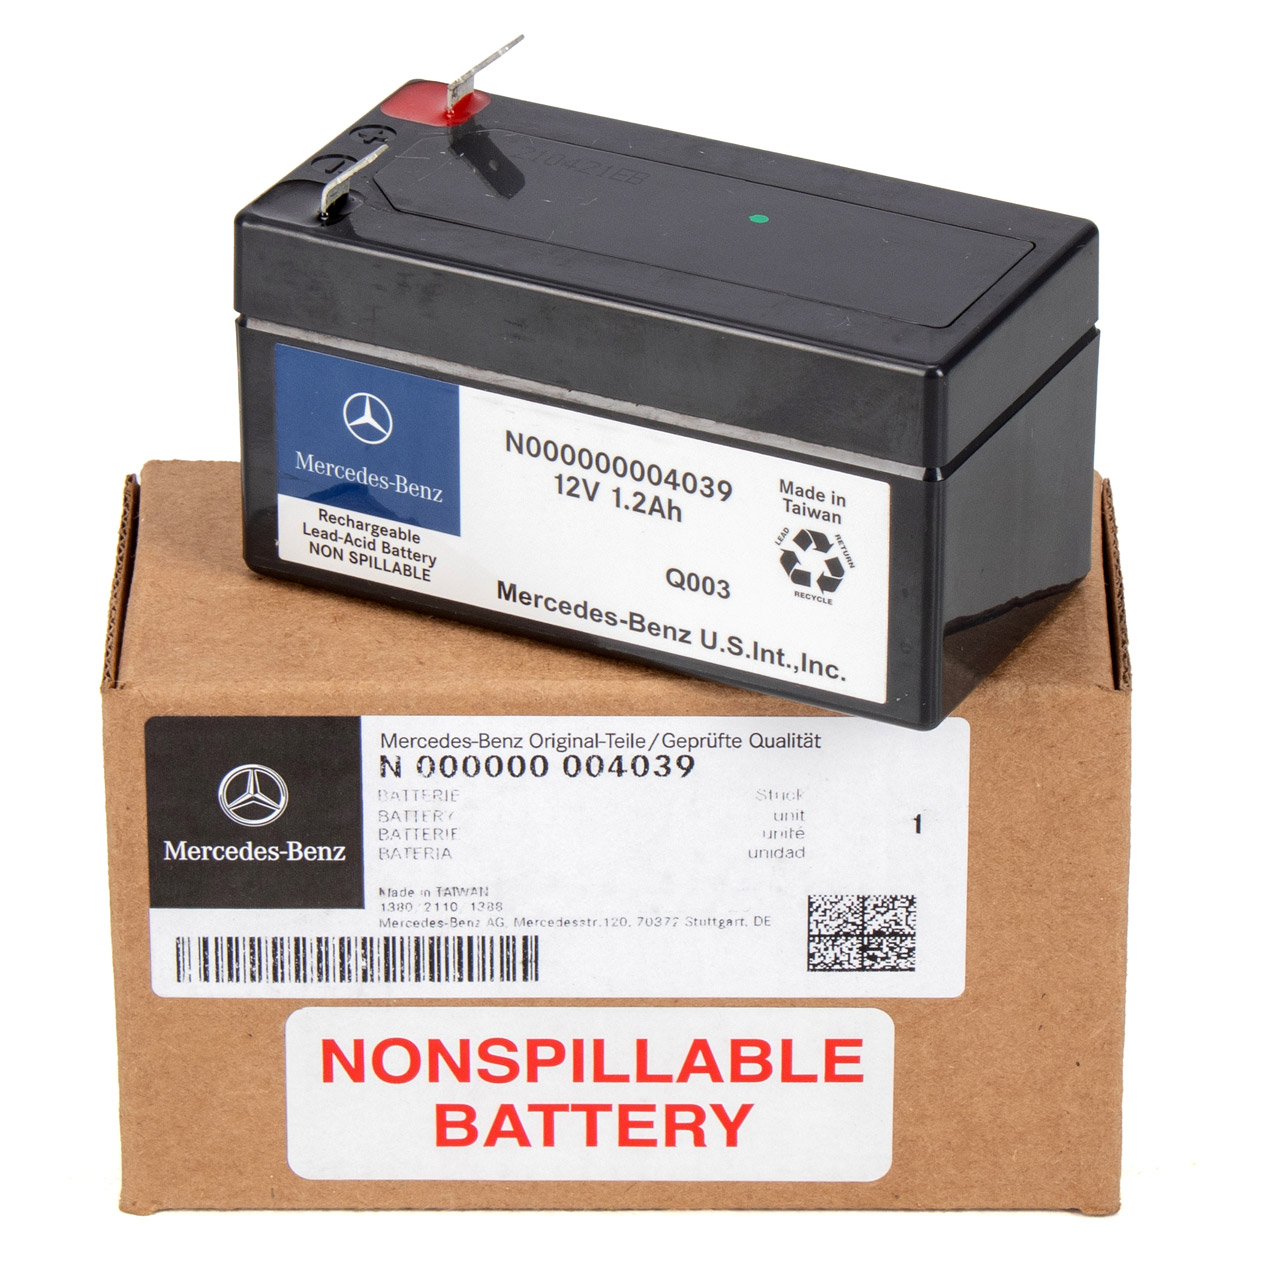 Original starter batteries for your vehicle